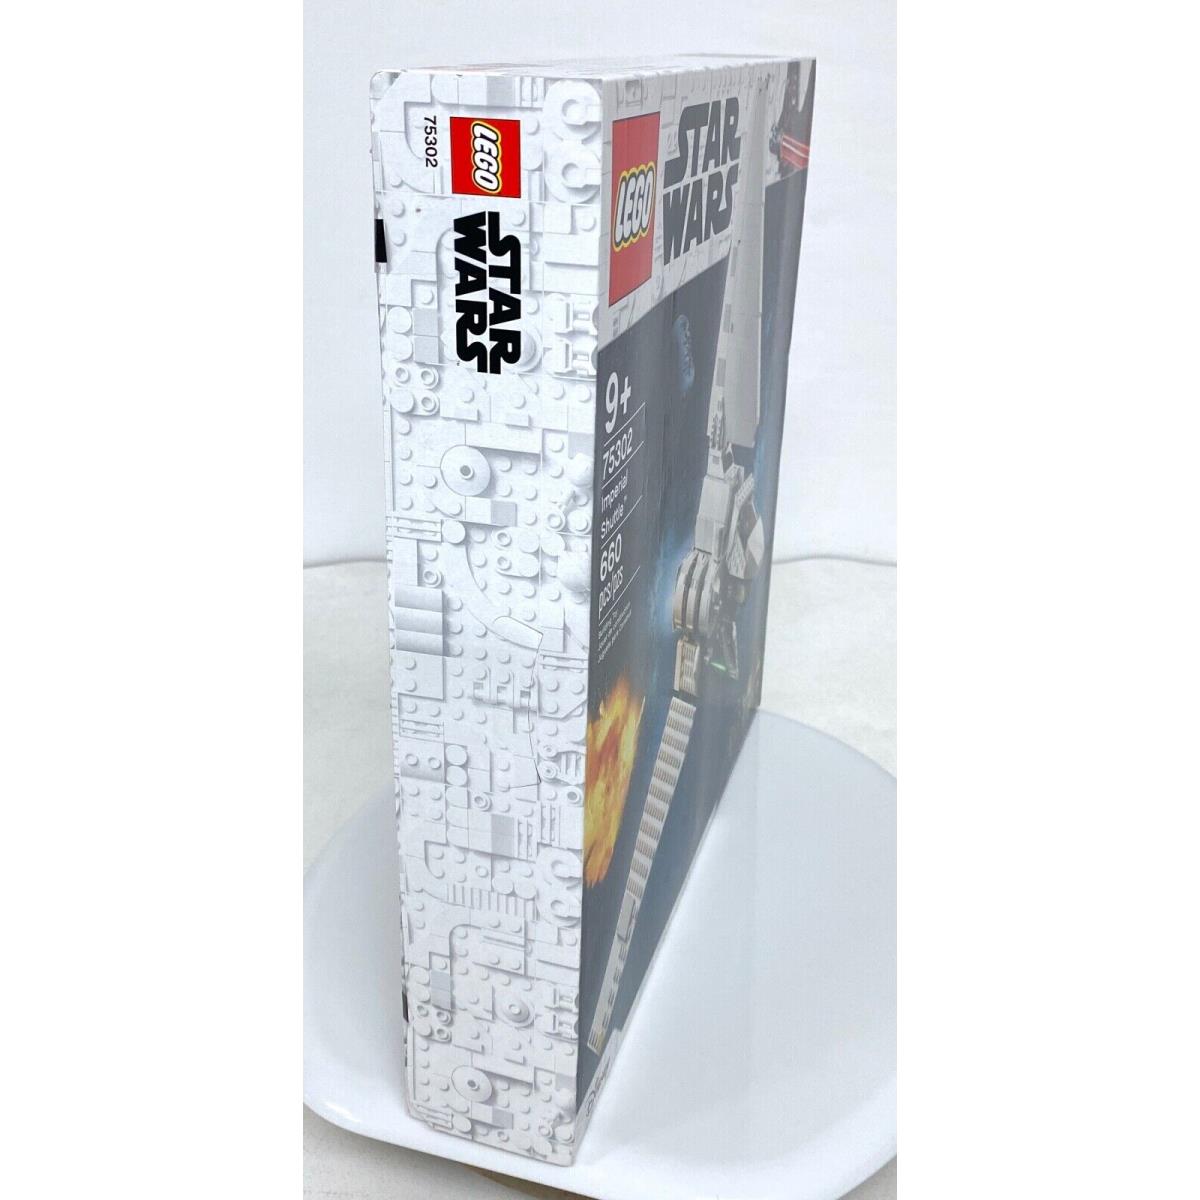 Lego 75302 Star Wars Imperial Shuttle 660 Pcs